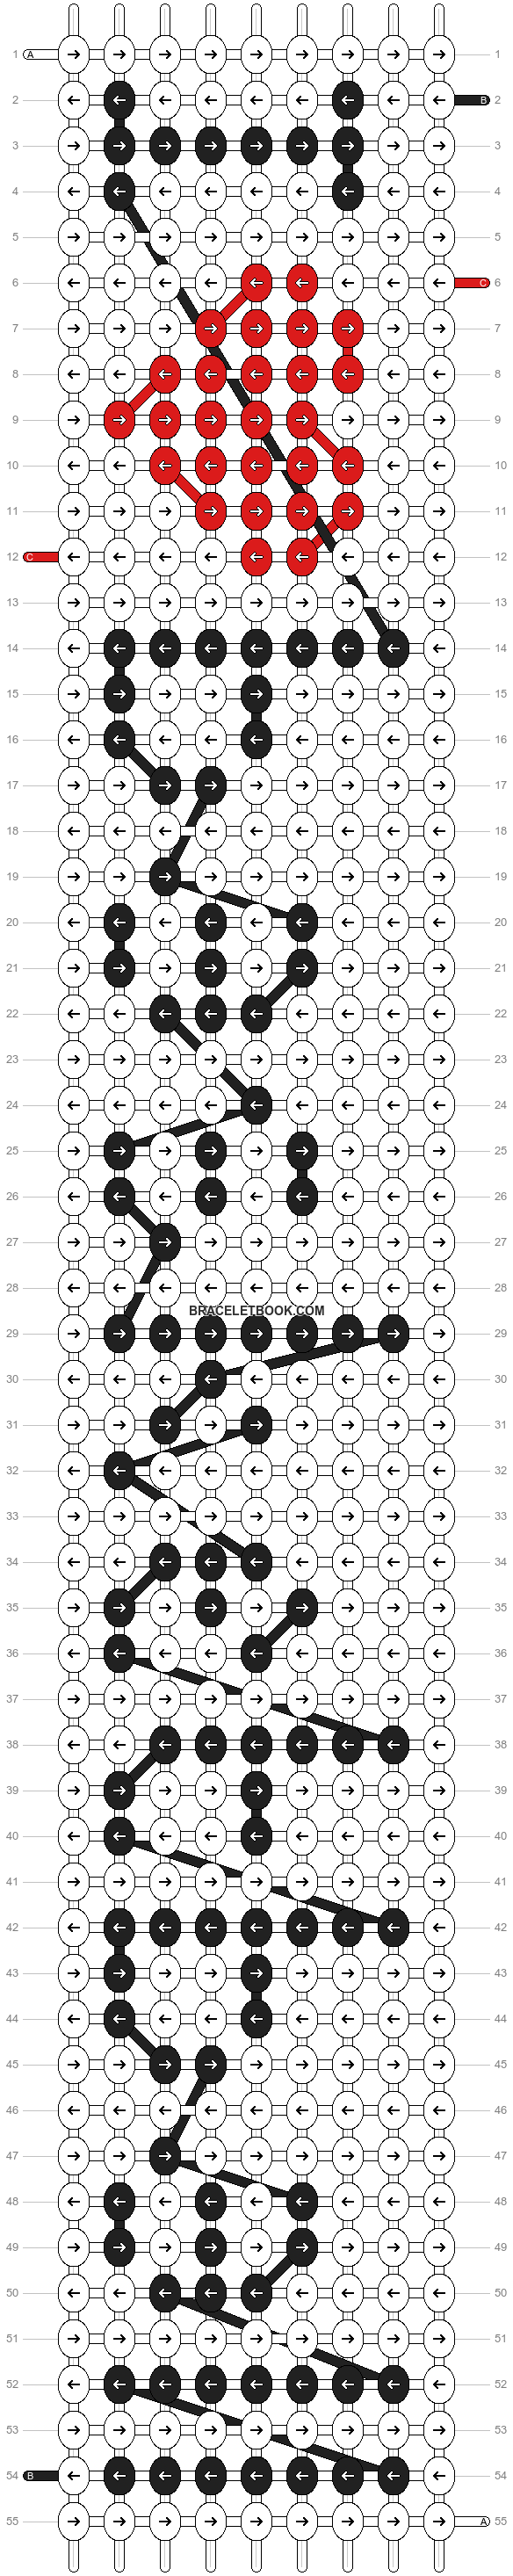 Alpha pattern #5801 pattern